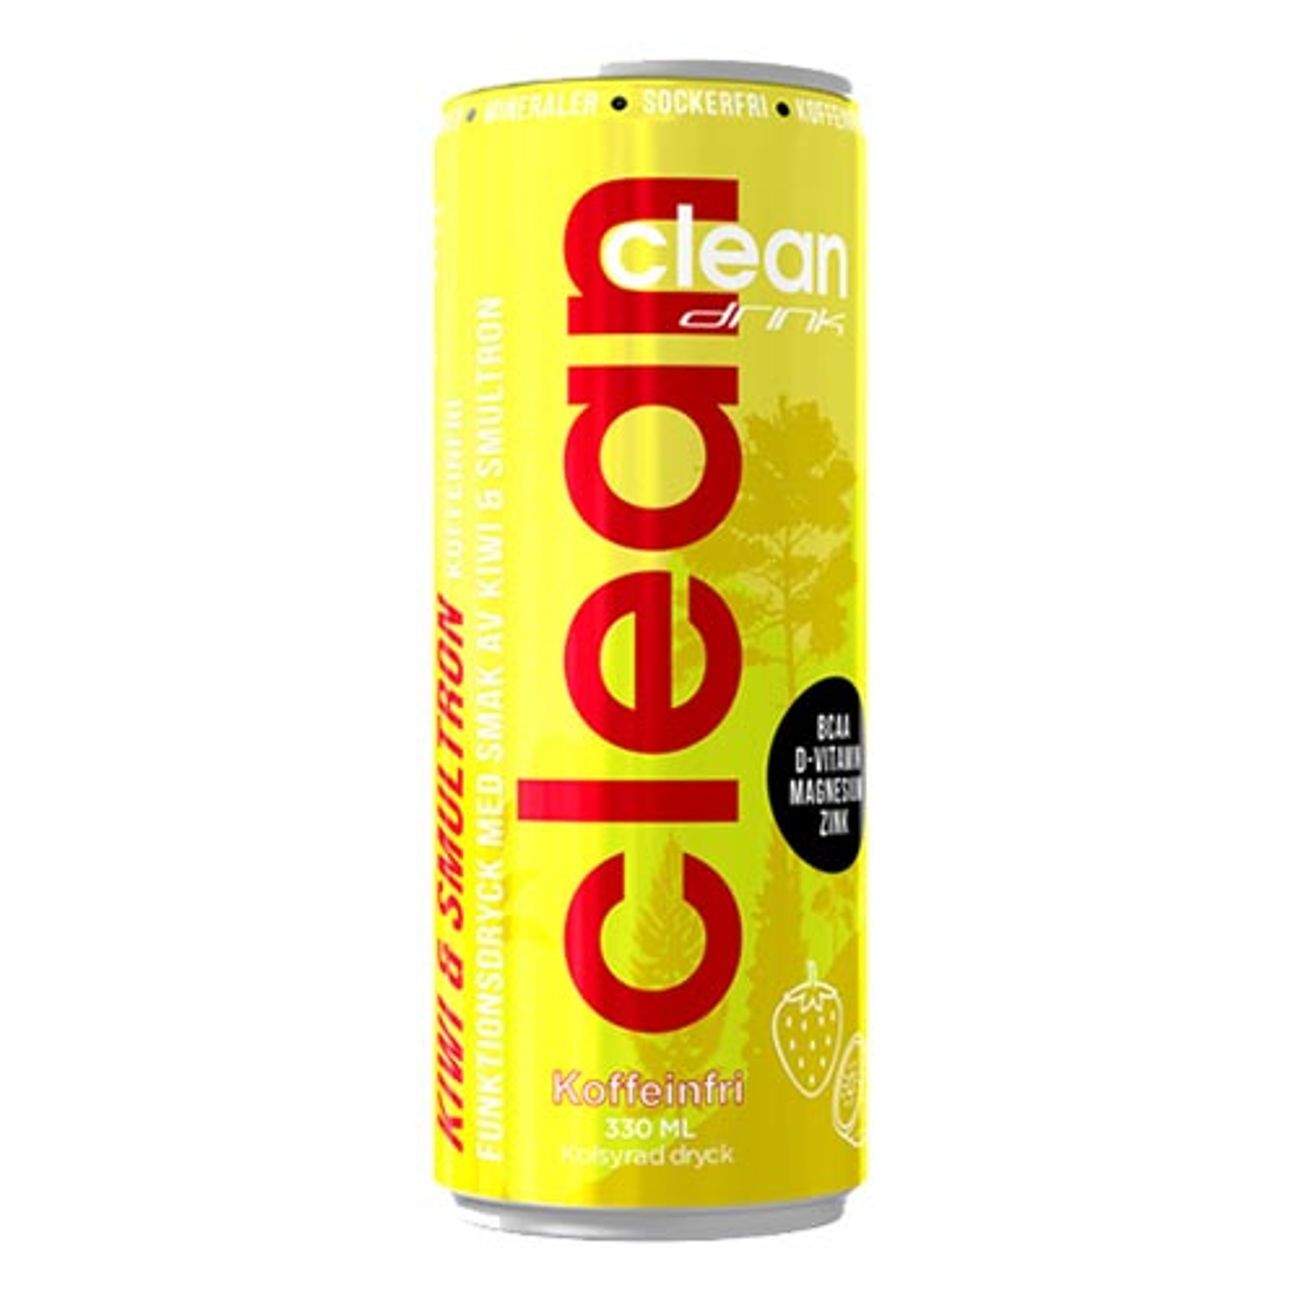 cleandrink-kiwi-smultron-koffeinfri-1